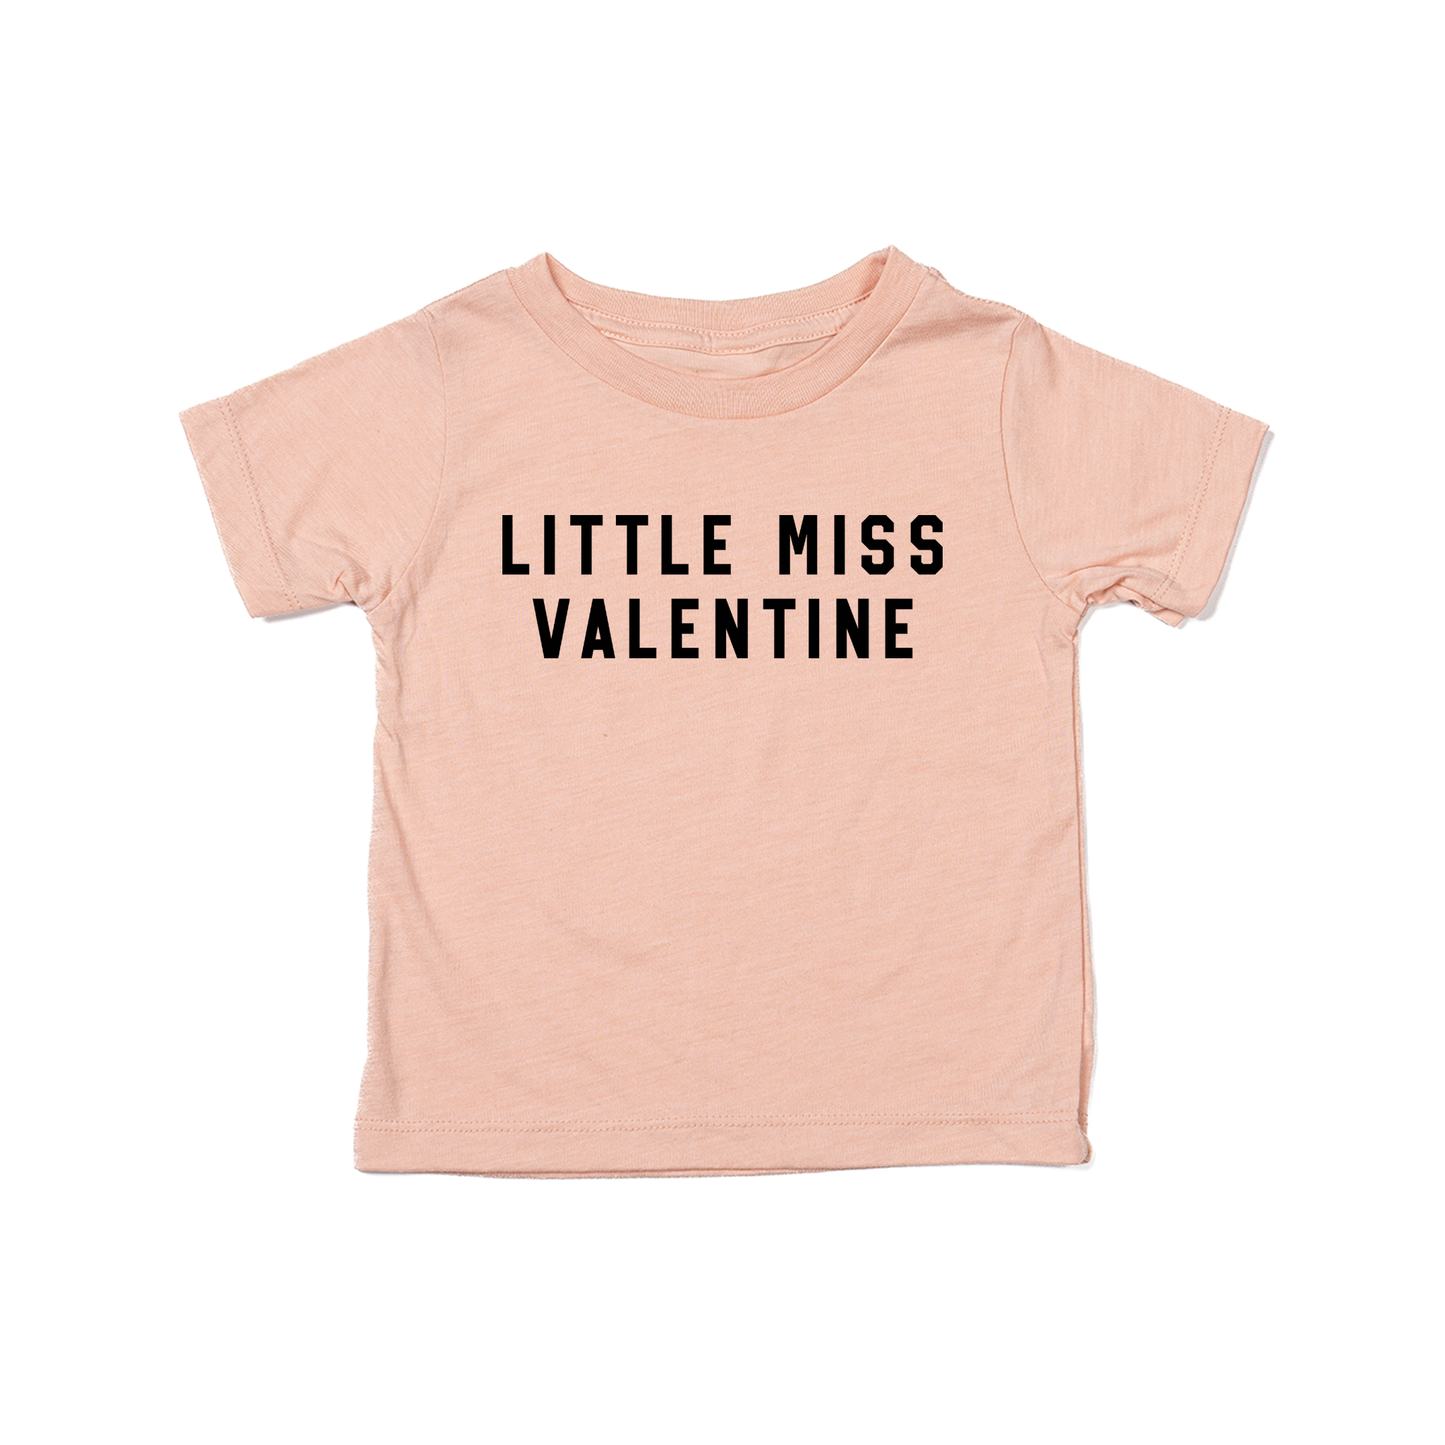 Little Miss Valentine (Black) - Kids Tee (Peach)